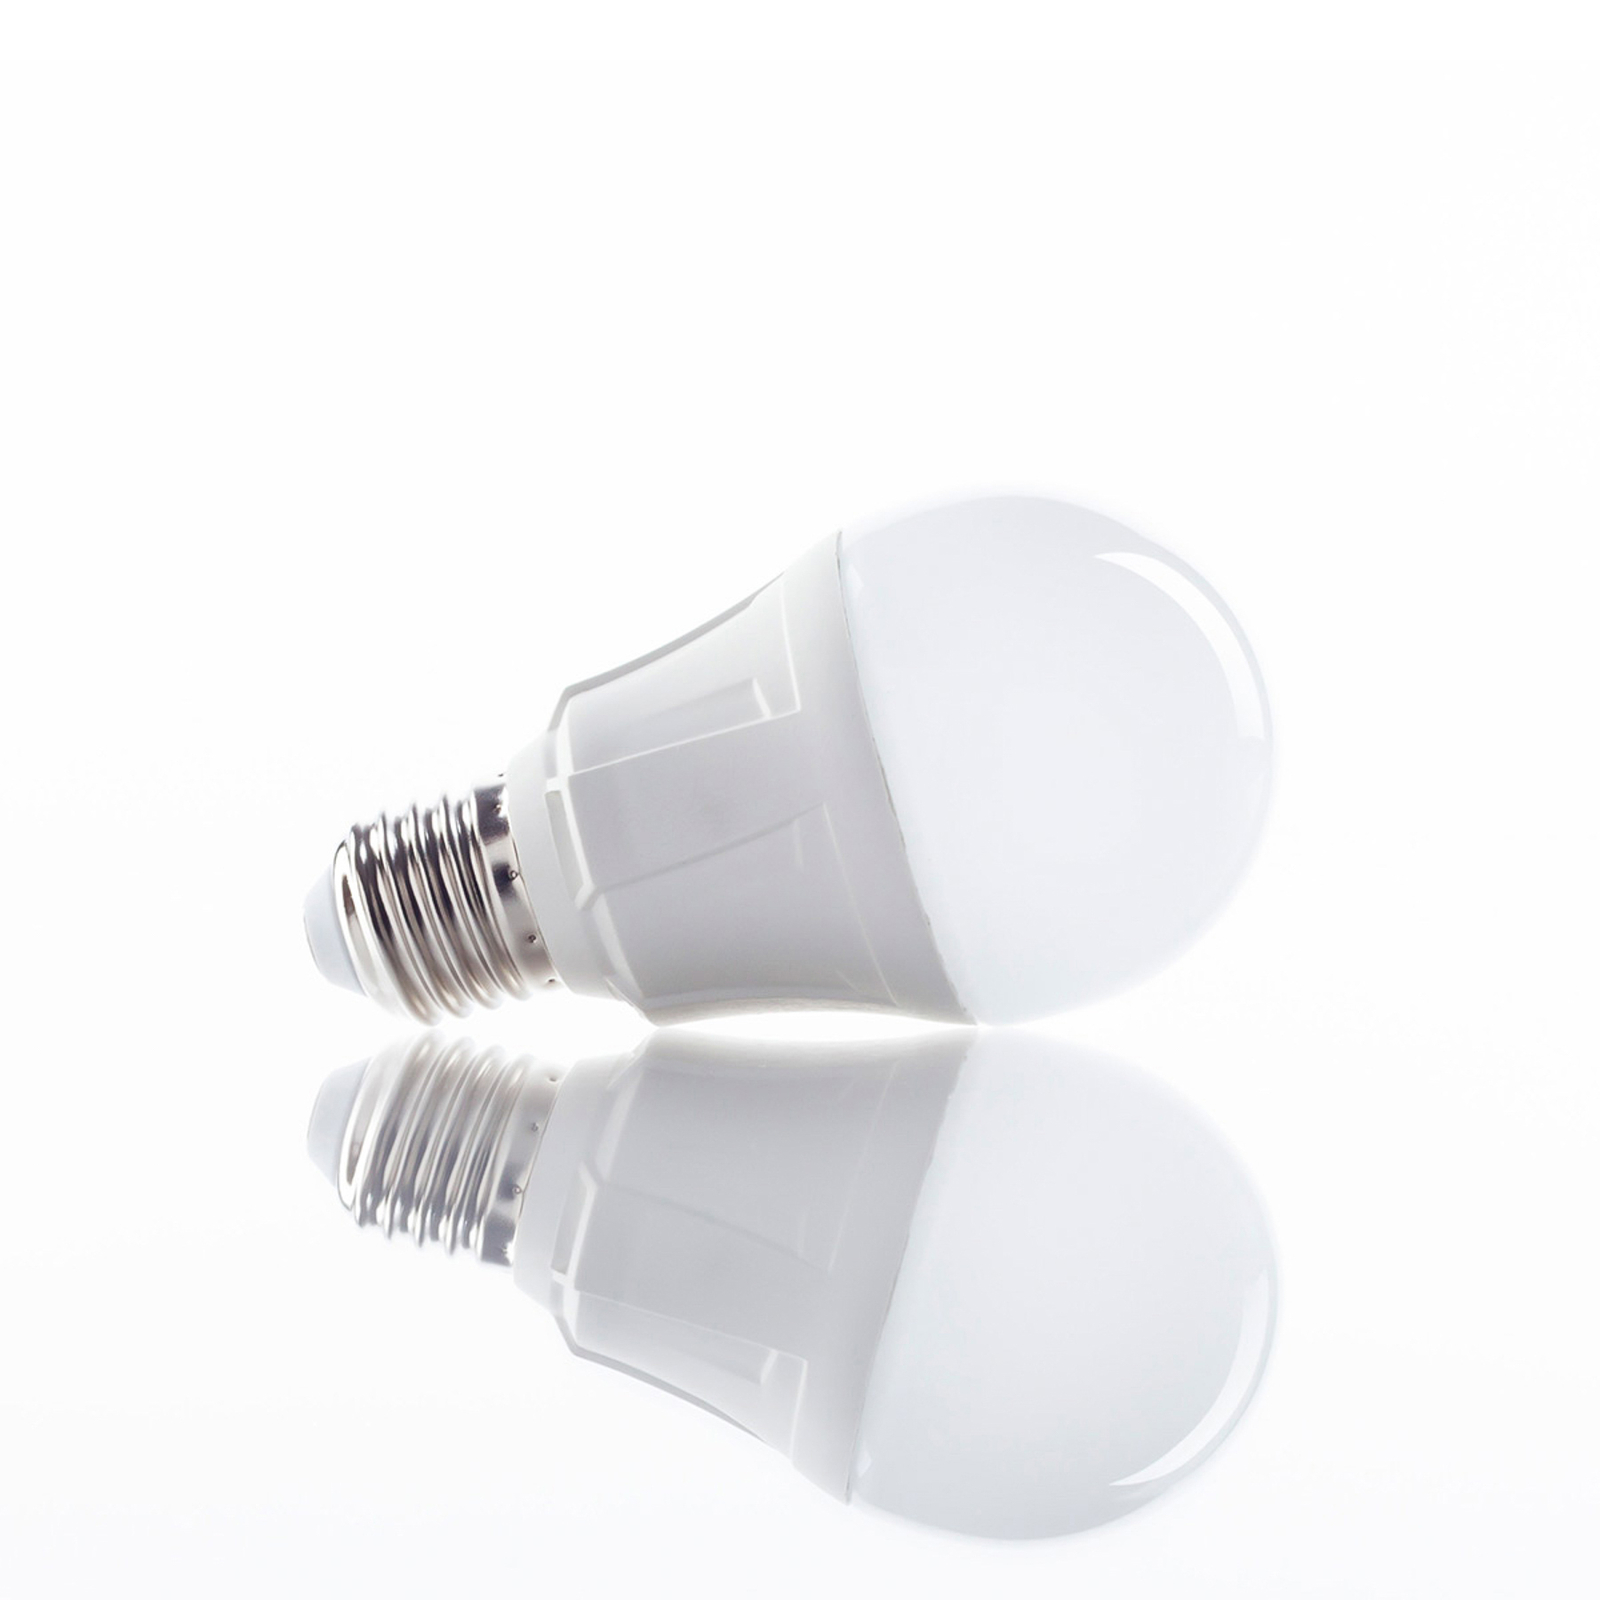 LED-lampa glödlampsform E27 11W 830 3-pack